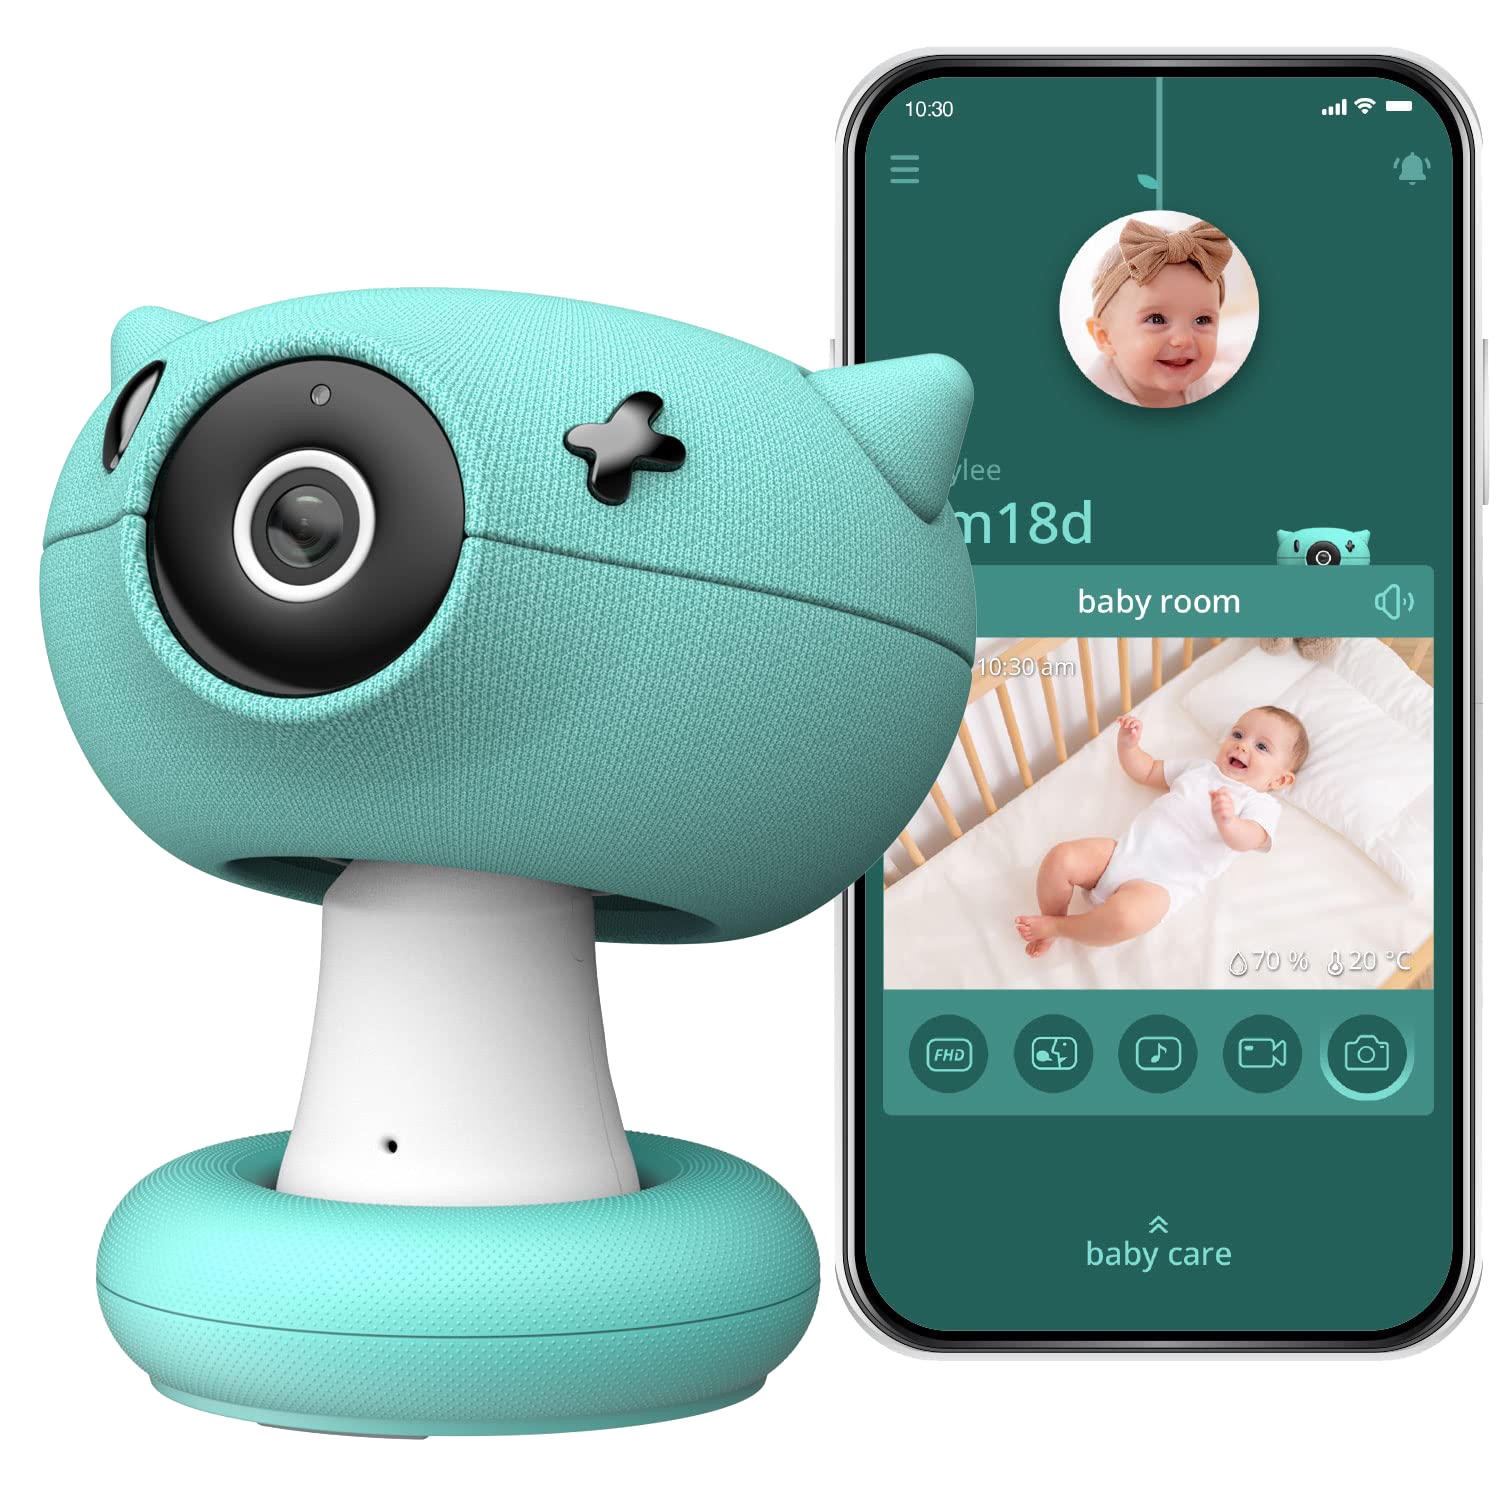 Smart baby monitor